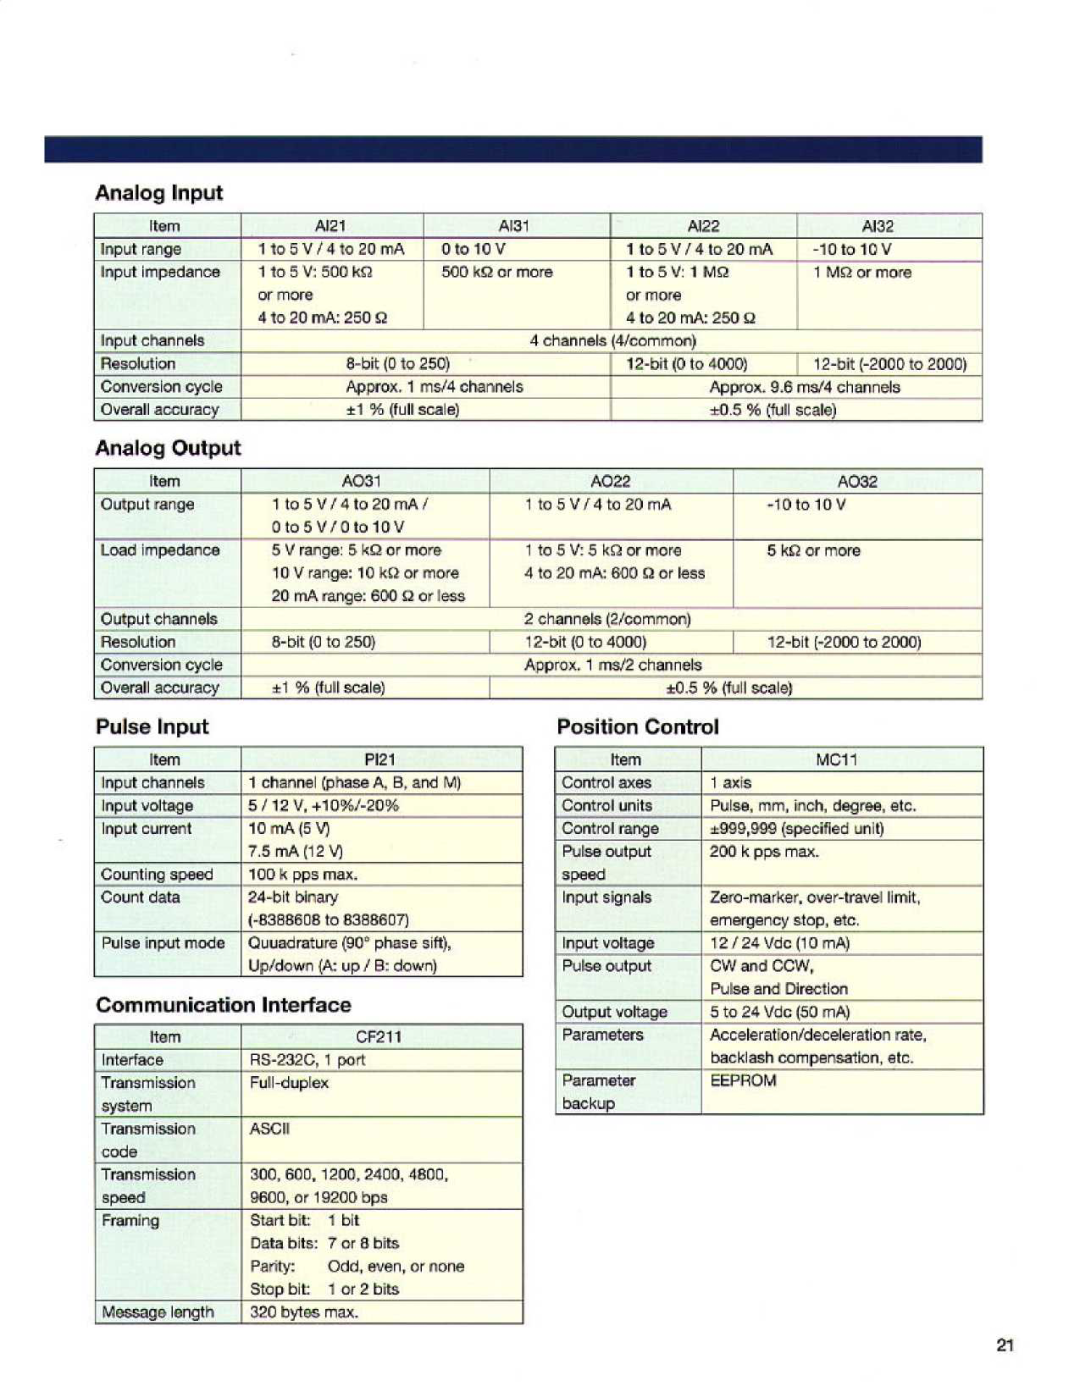 Toshiba T2E manual Analog Input, Analog Output, Pulse Input, Communication, Interface, 5 to 24 Vdc ,50 MA 